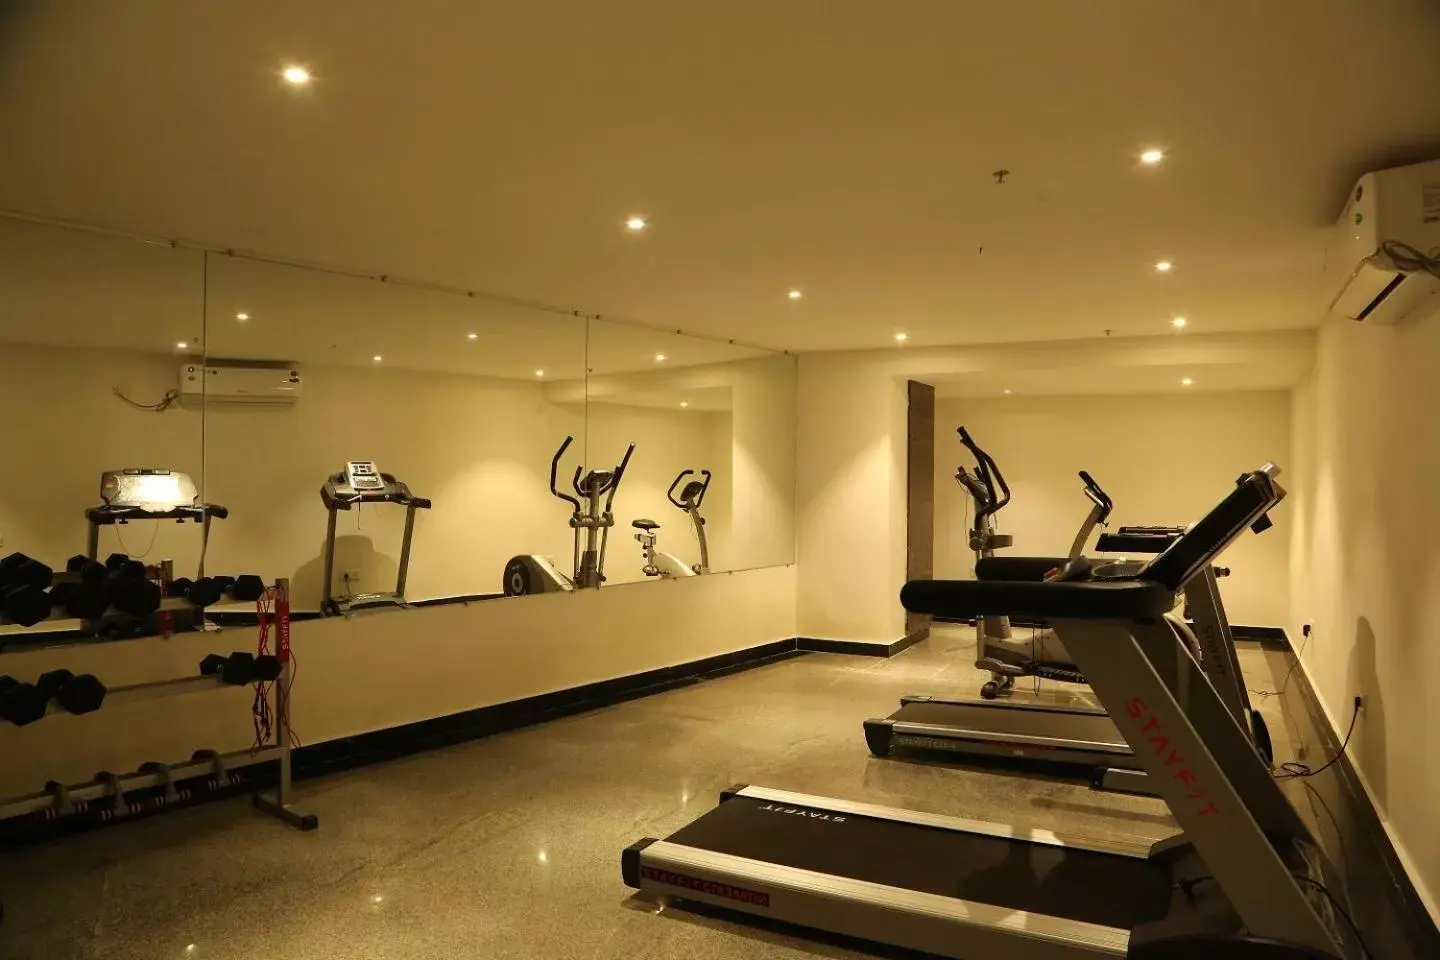 Fitness centre/facilities, Fitness Center/Facilities in Hotel Deccan Serai, HITEC CITY, HYDERABAD